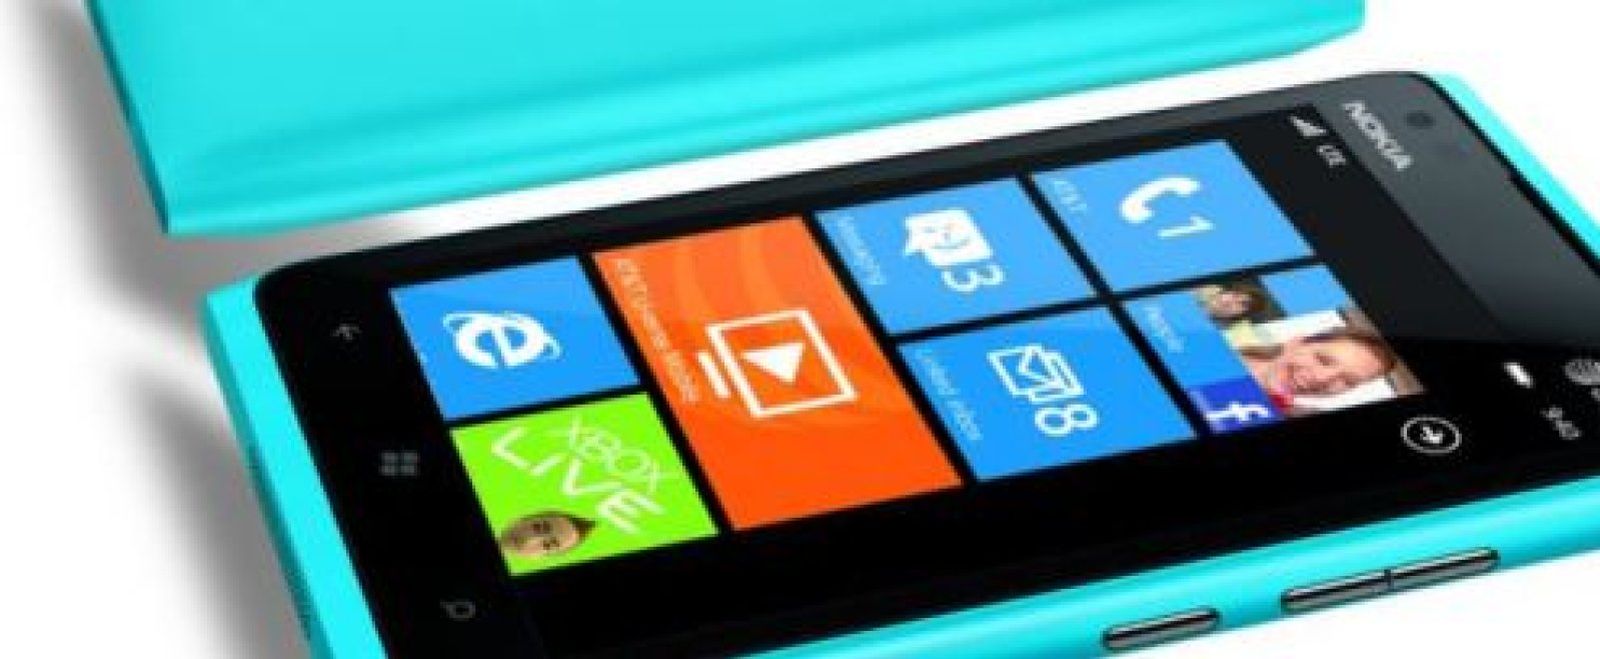 Foto: Nokia Lumia 900: "El mejor Windows Phone de la historia"